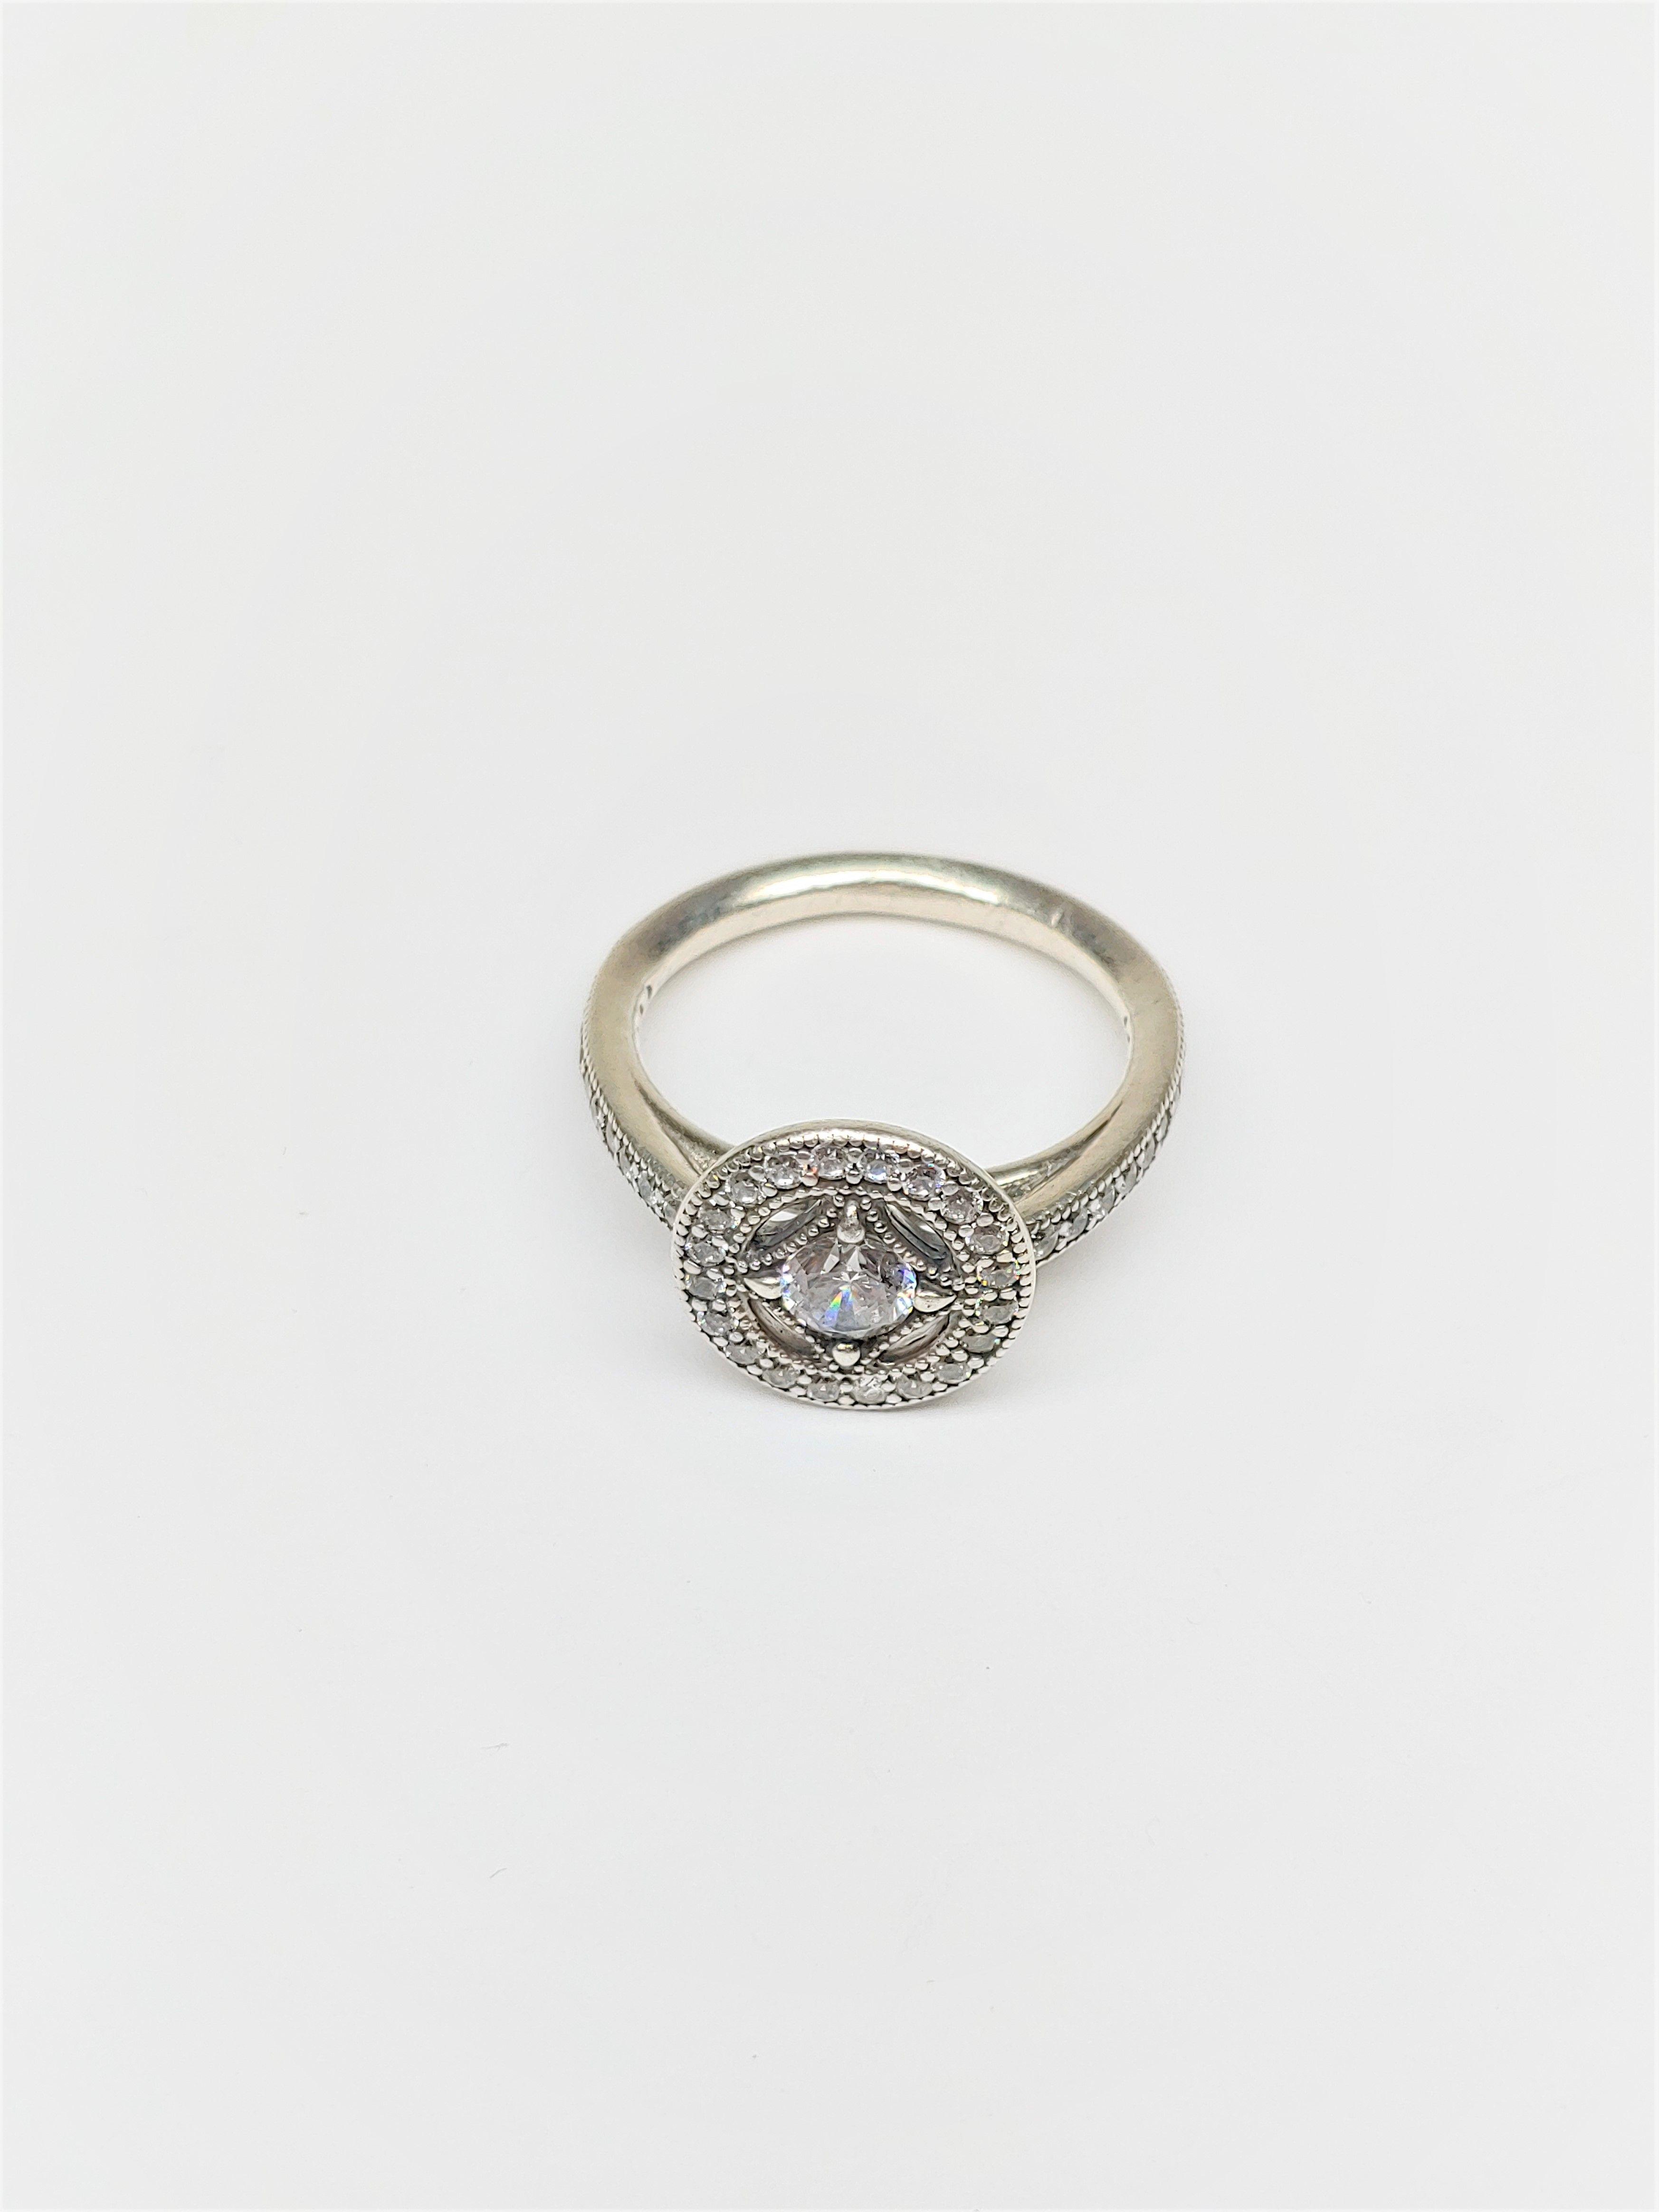 Designer Pandoran Woman's Vintage Allure Ring Size 4.5 Silver ALE 925